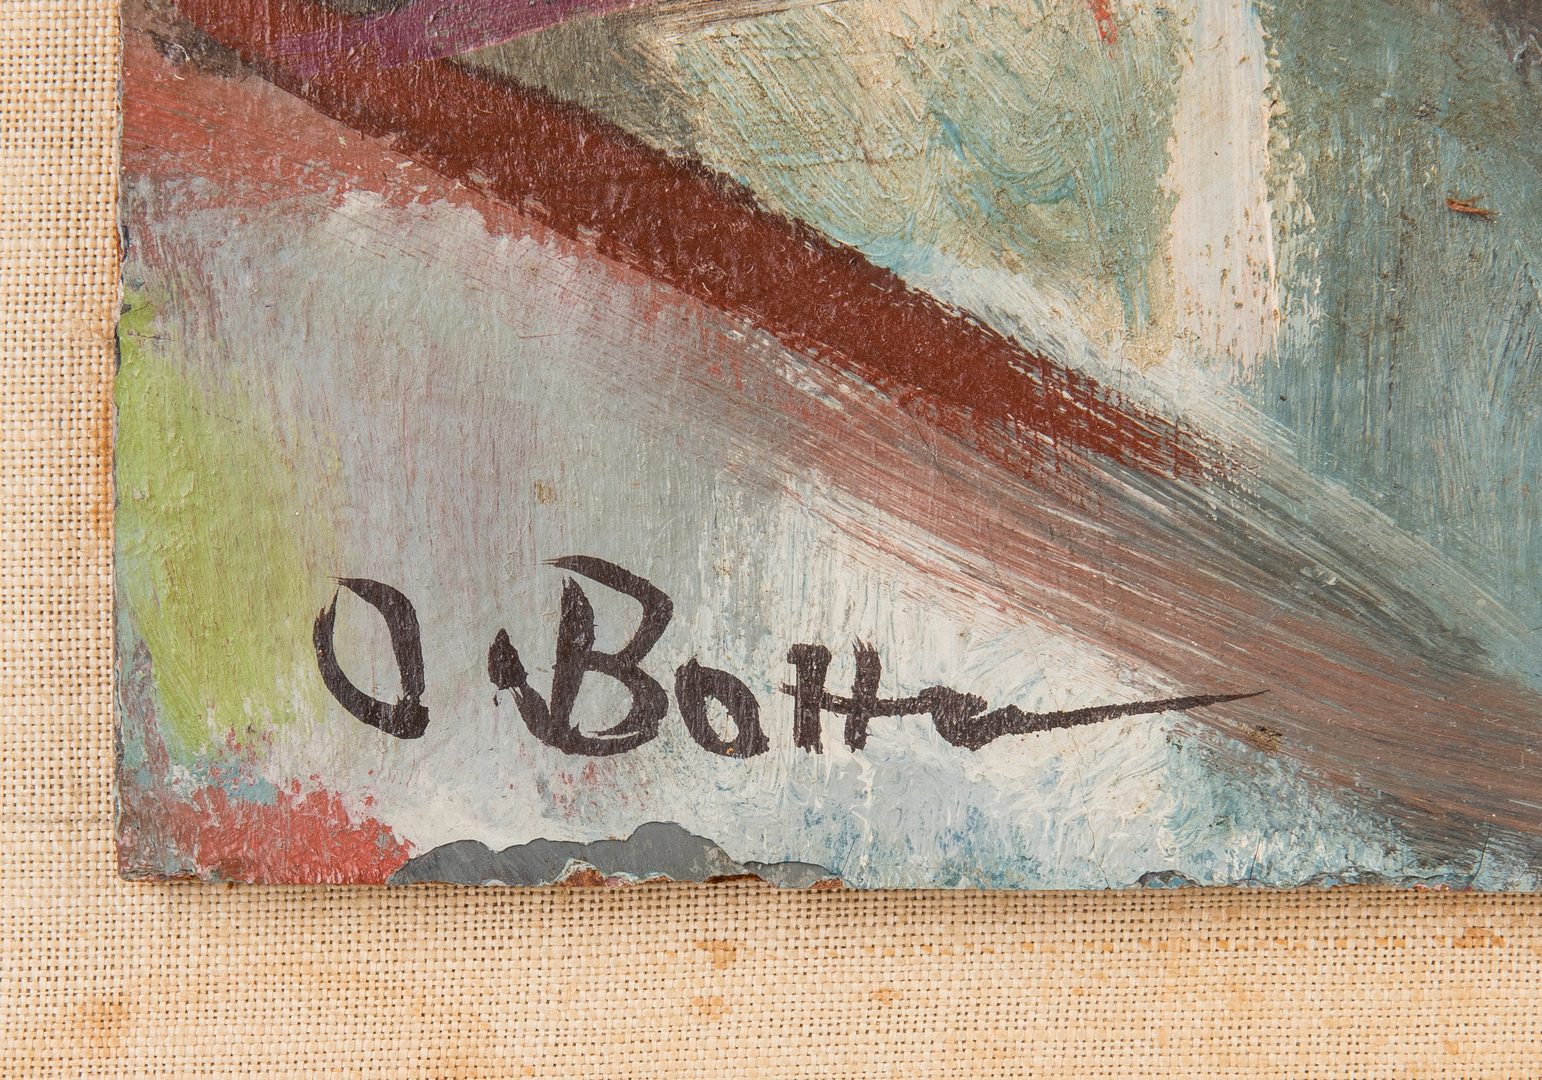 Lot 256: Otto Botto O/C Abstract Painting, Sail Boats